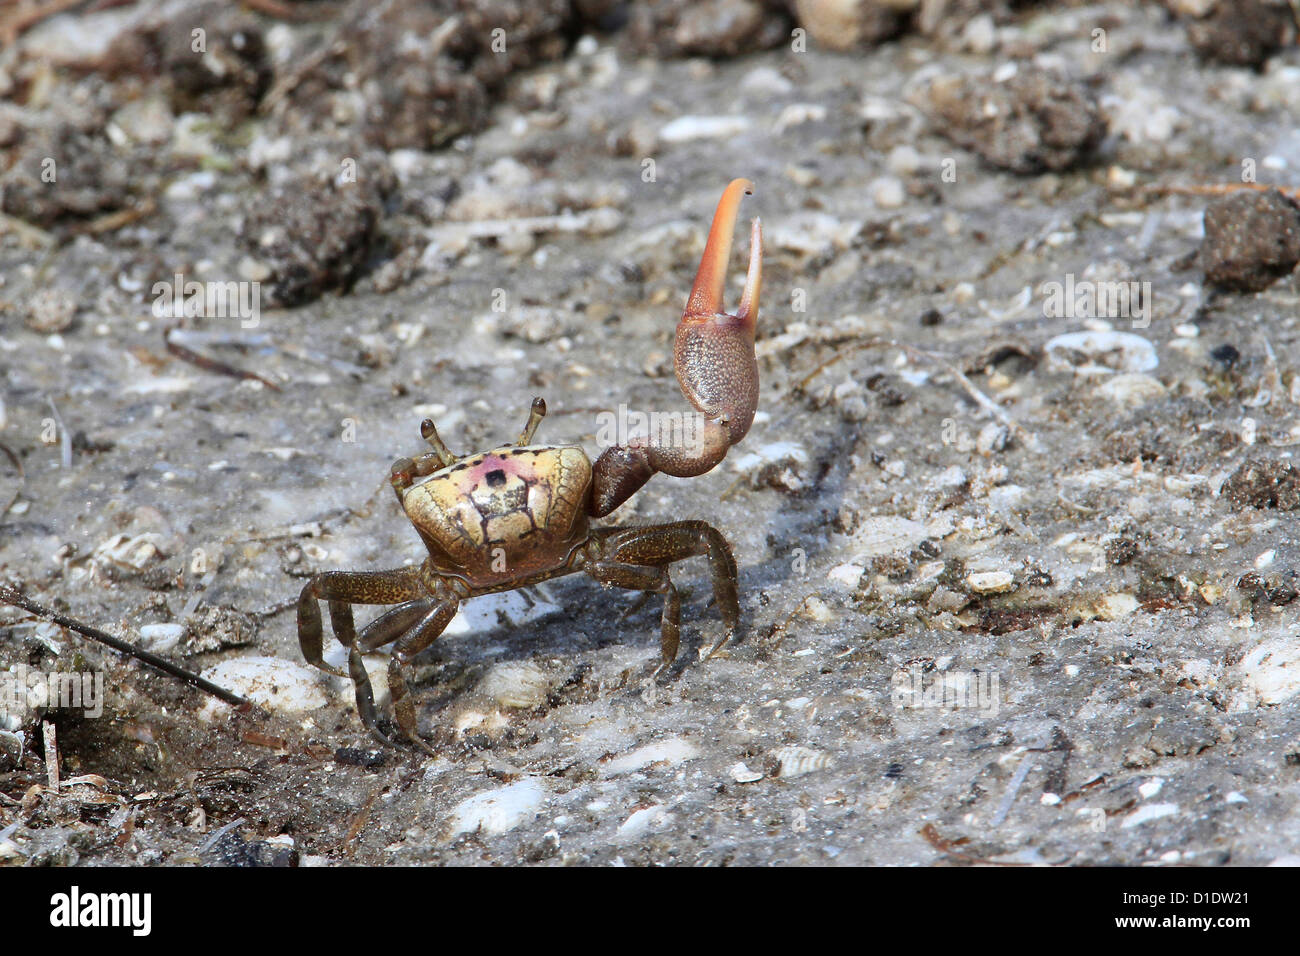 Sand Fiddler Crab (Uca pugilator), right-handed male on beach